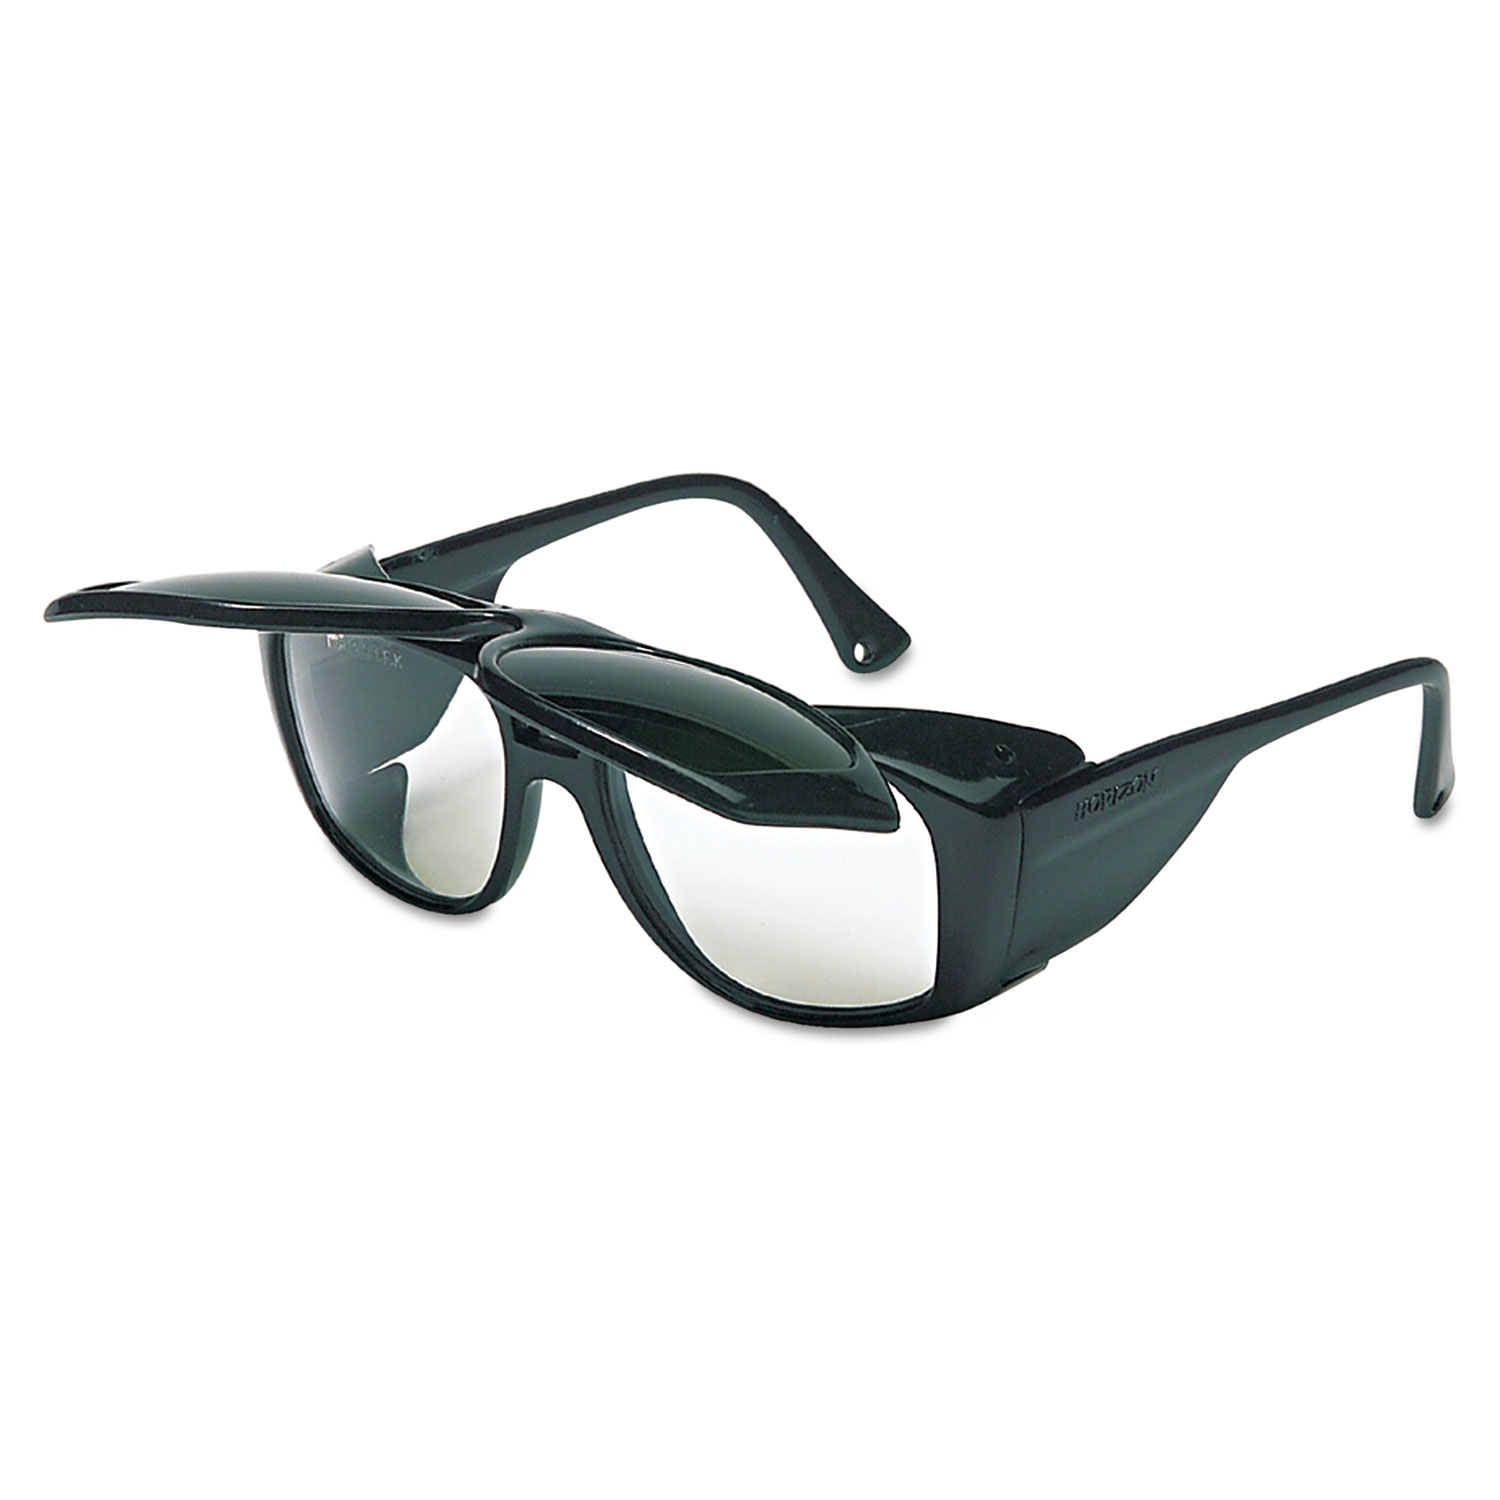 Horizon Flip-Up Safety Glasses, Black Frame, Clear/Shade 5.0 Lenses